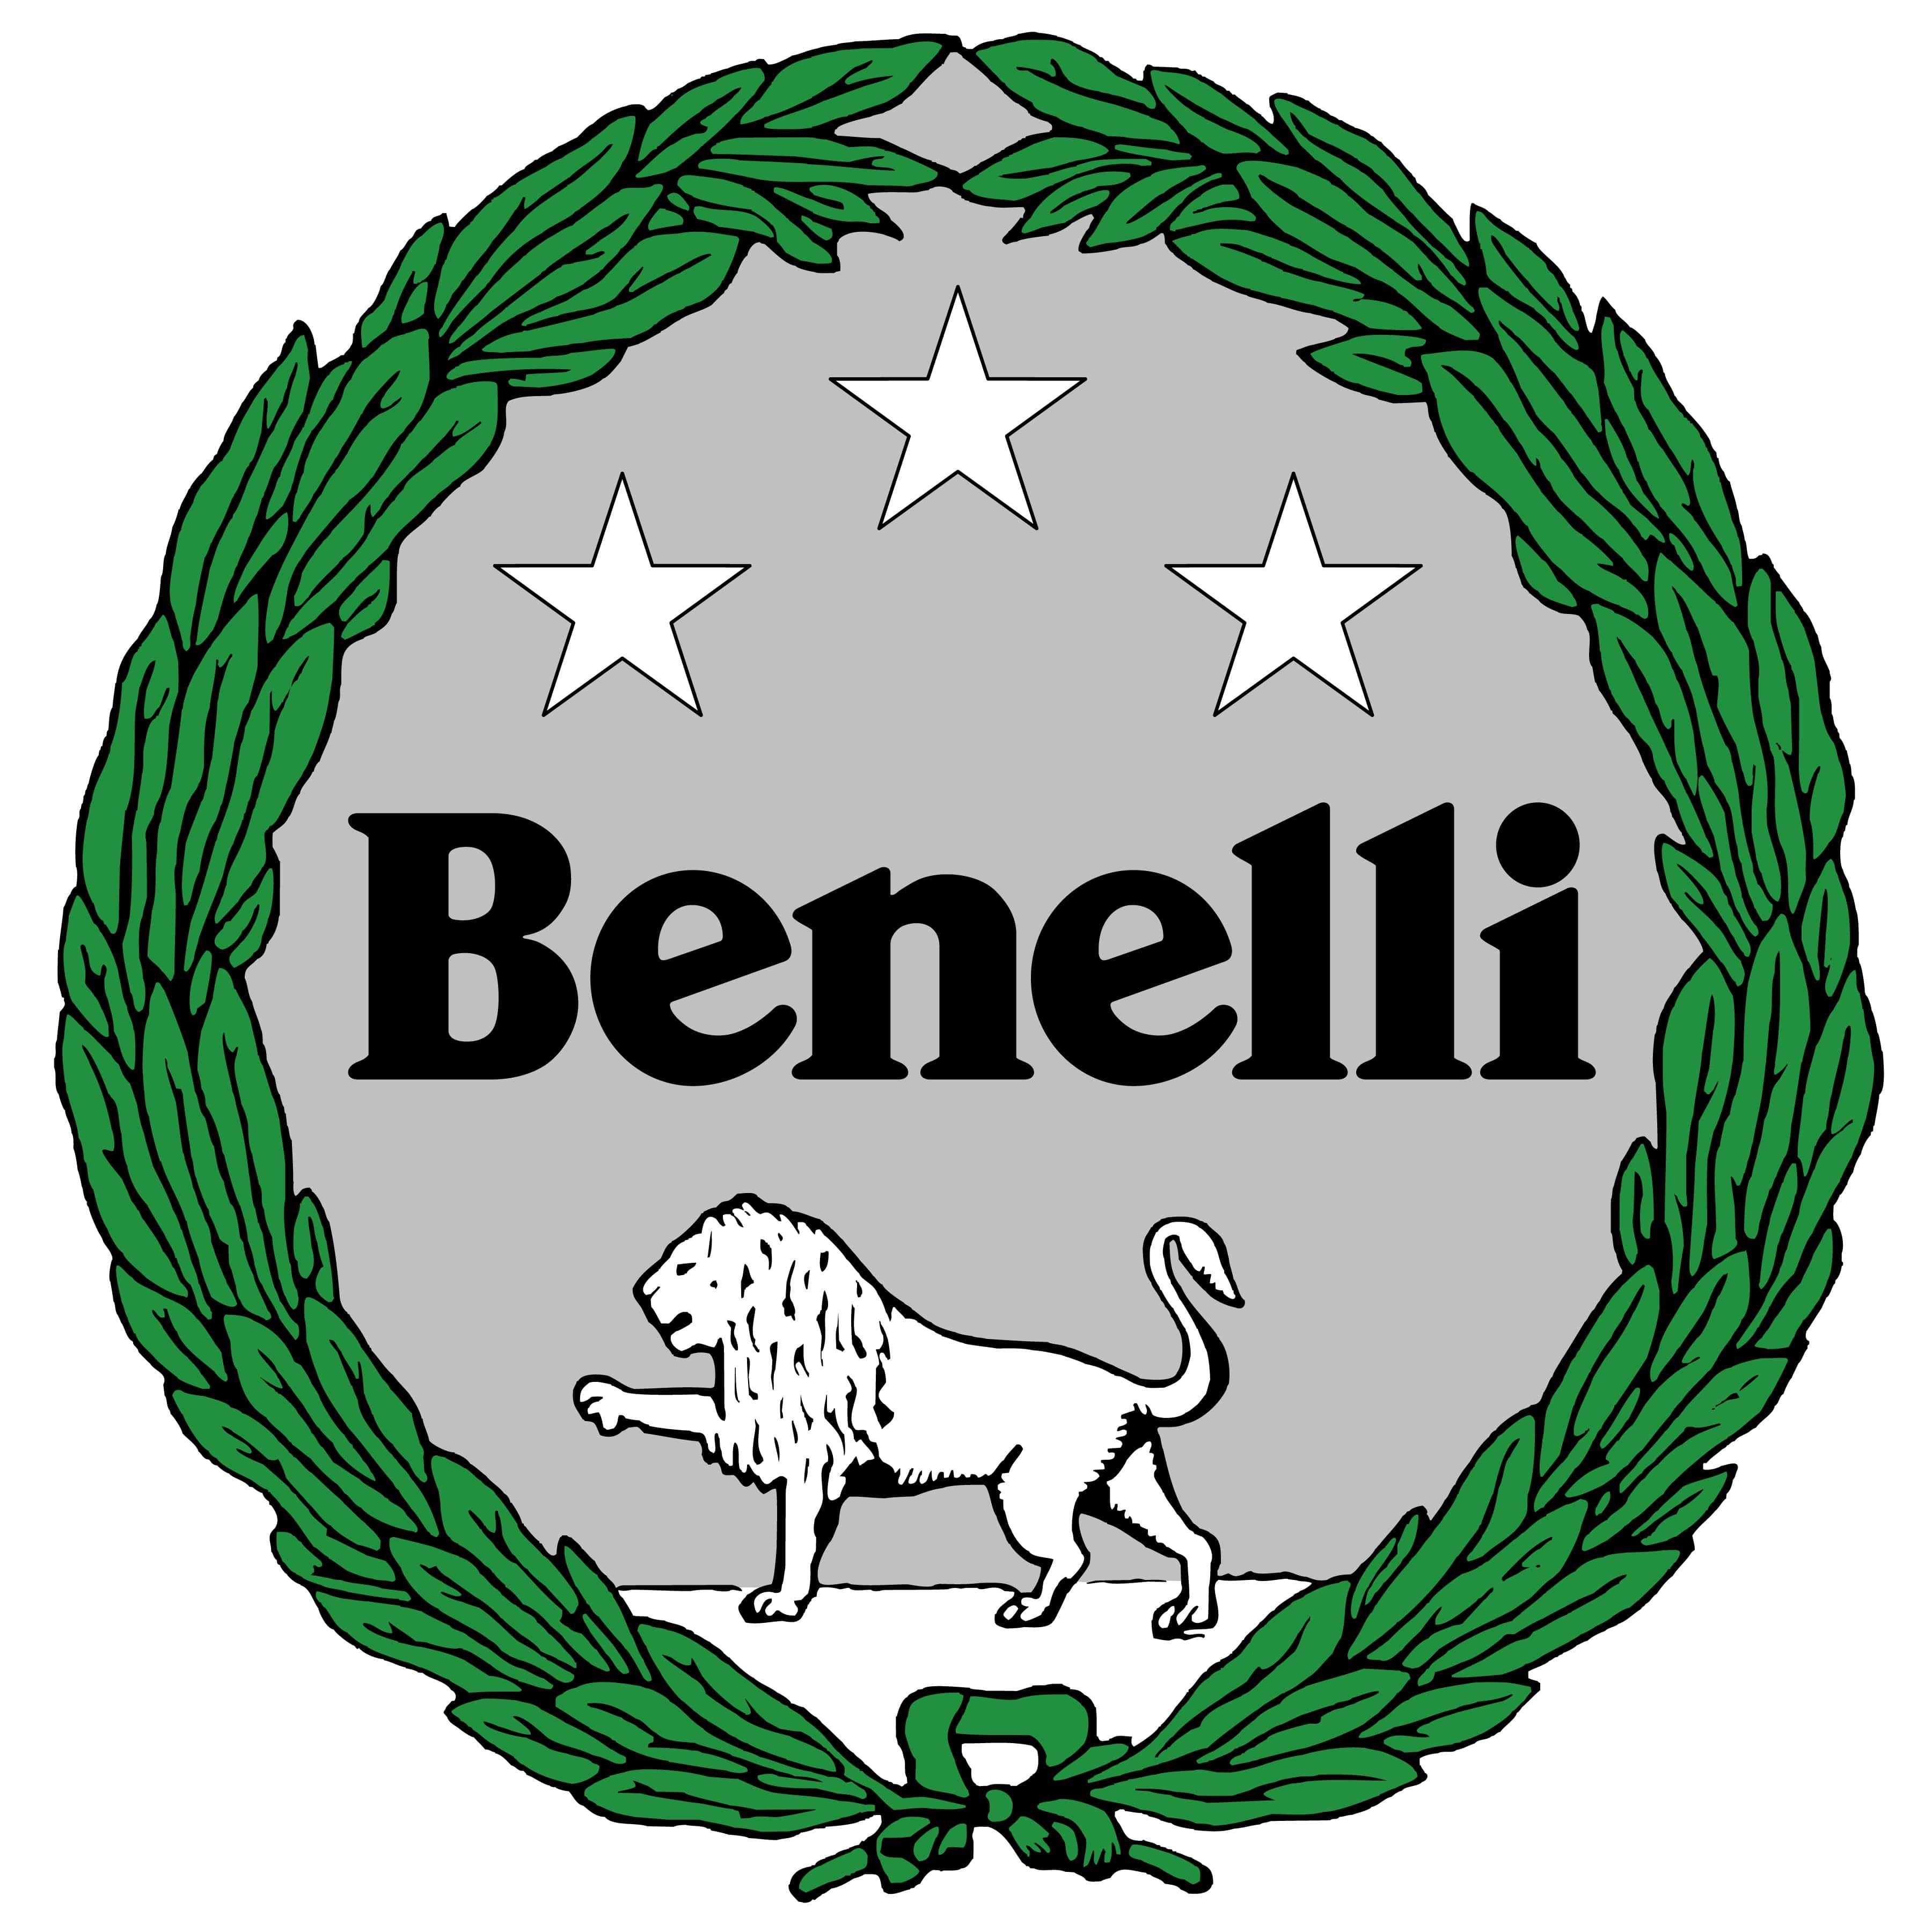 Benelli Logo - Logo Benelli Motorcycle | Motorcycle Logos | Motorcycle, Motorcycle ...